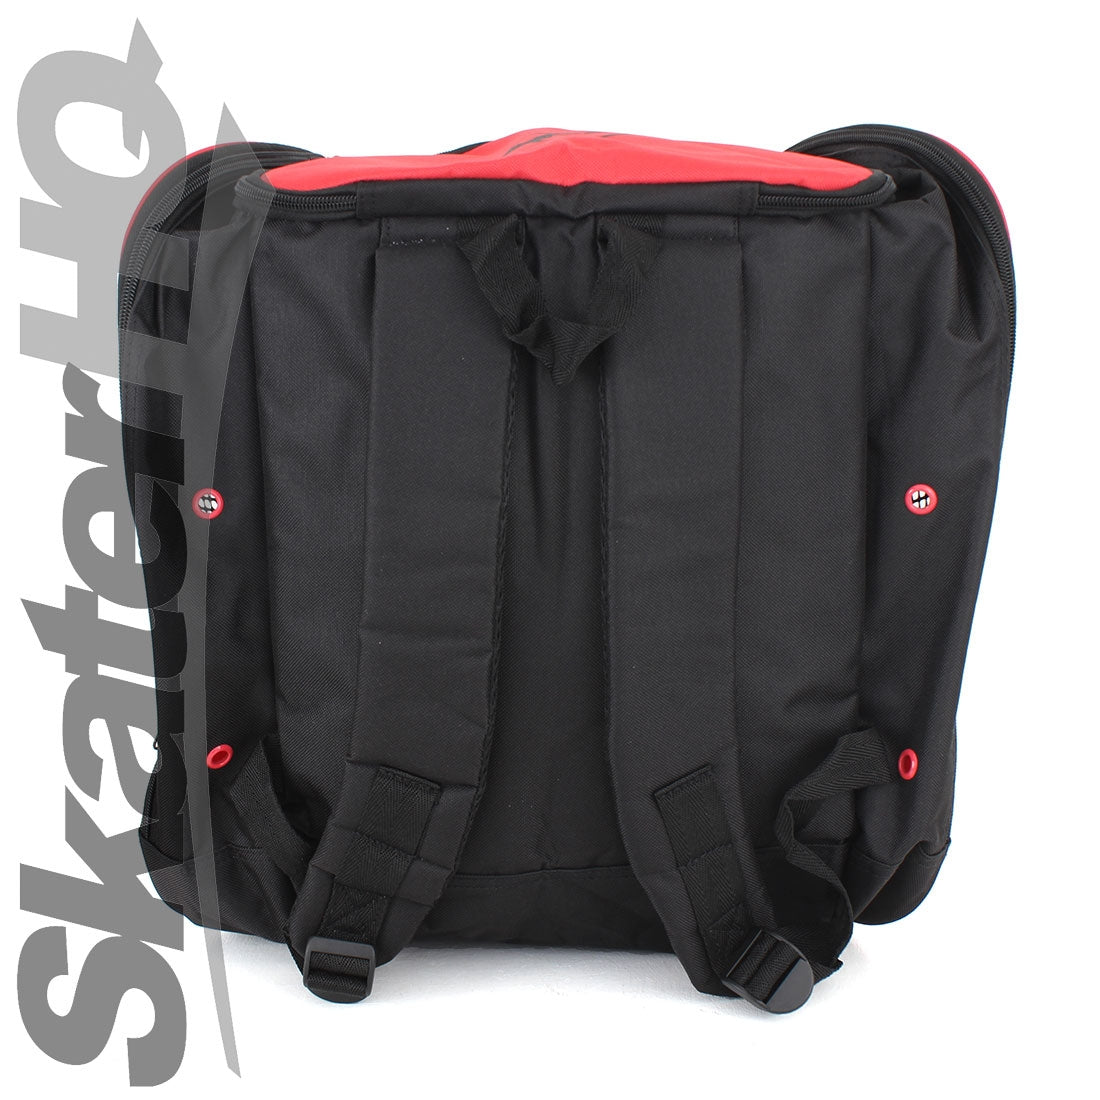 SFR Skate Backpack - Black/Red Bags and Backpacks